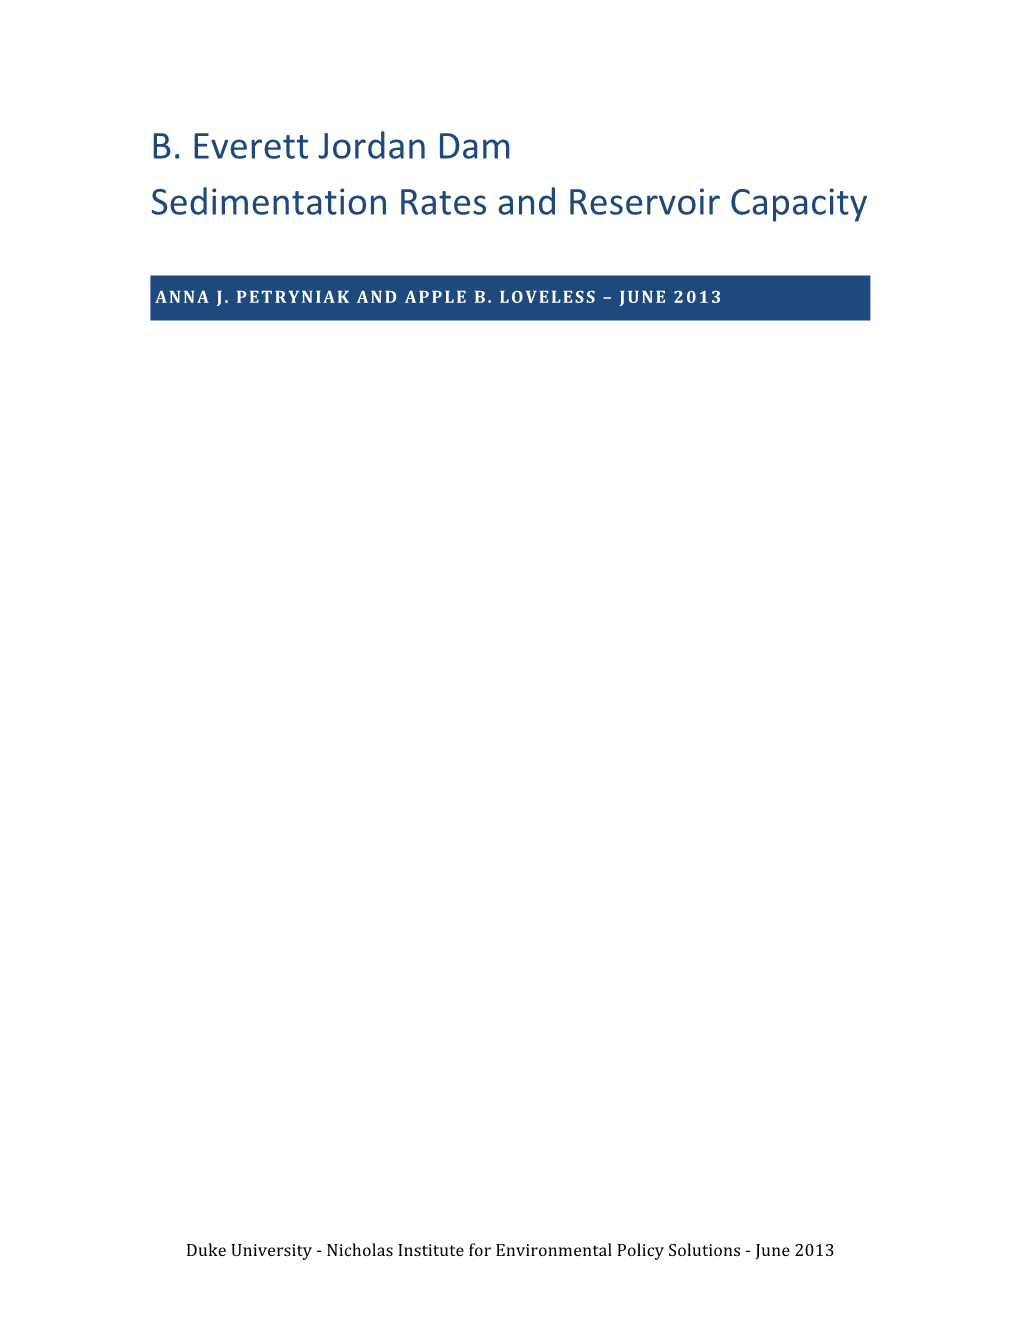 B. Everett Jordan Dam Sedimentation Rates and Reservoir Capacity